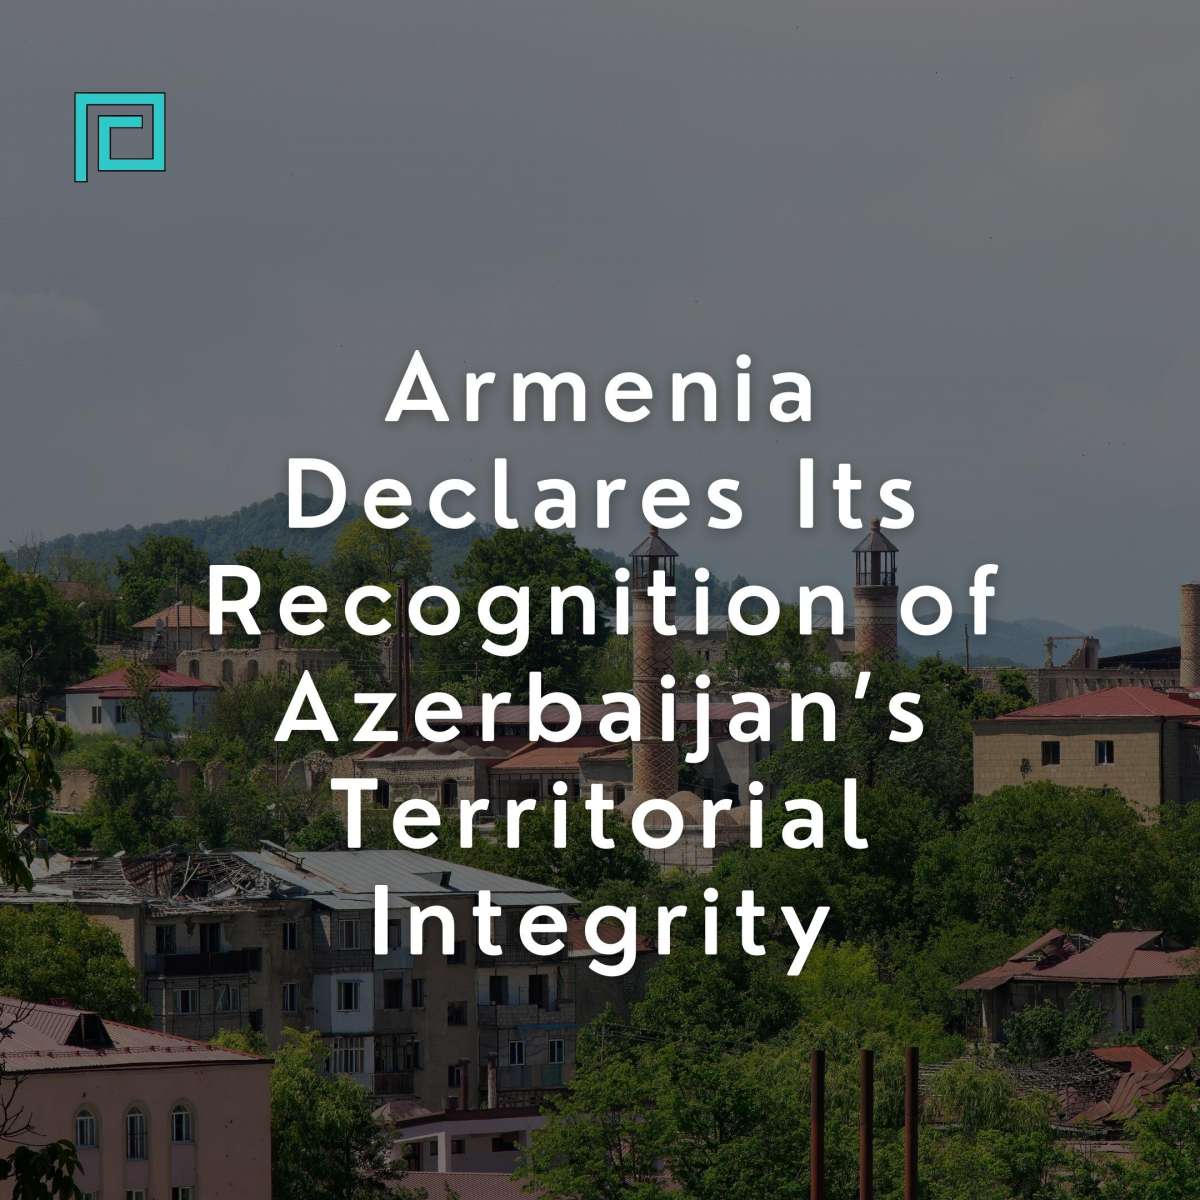 Armenia Declares on Recognition of Azerbaijan’s Territorial Integrity